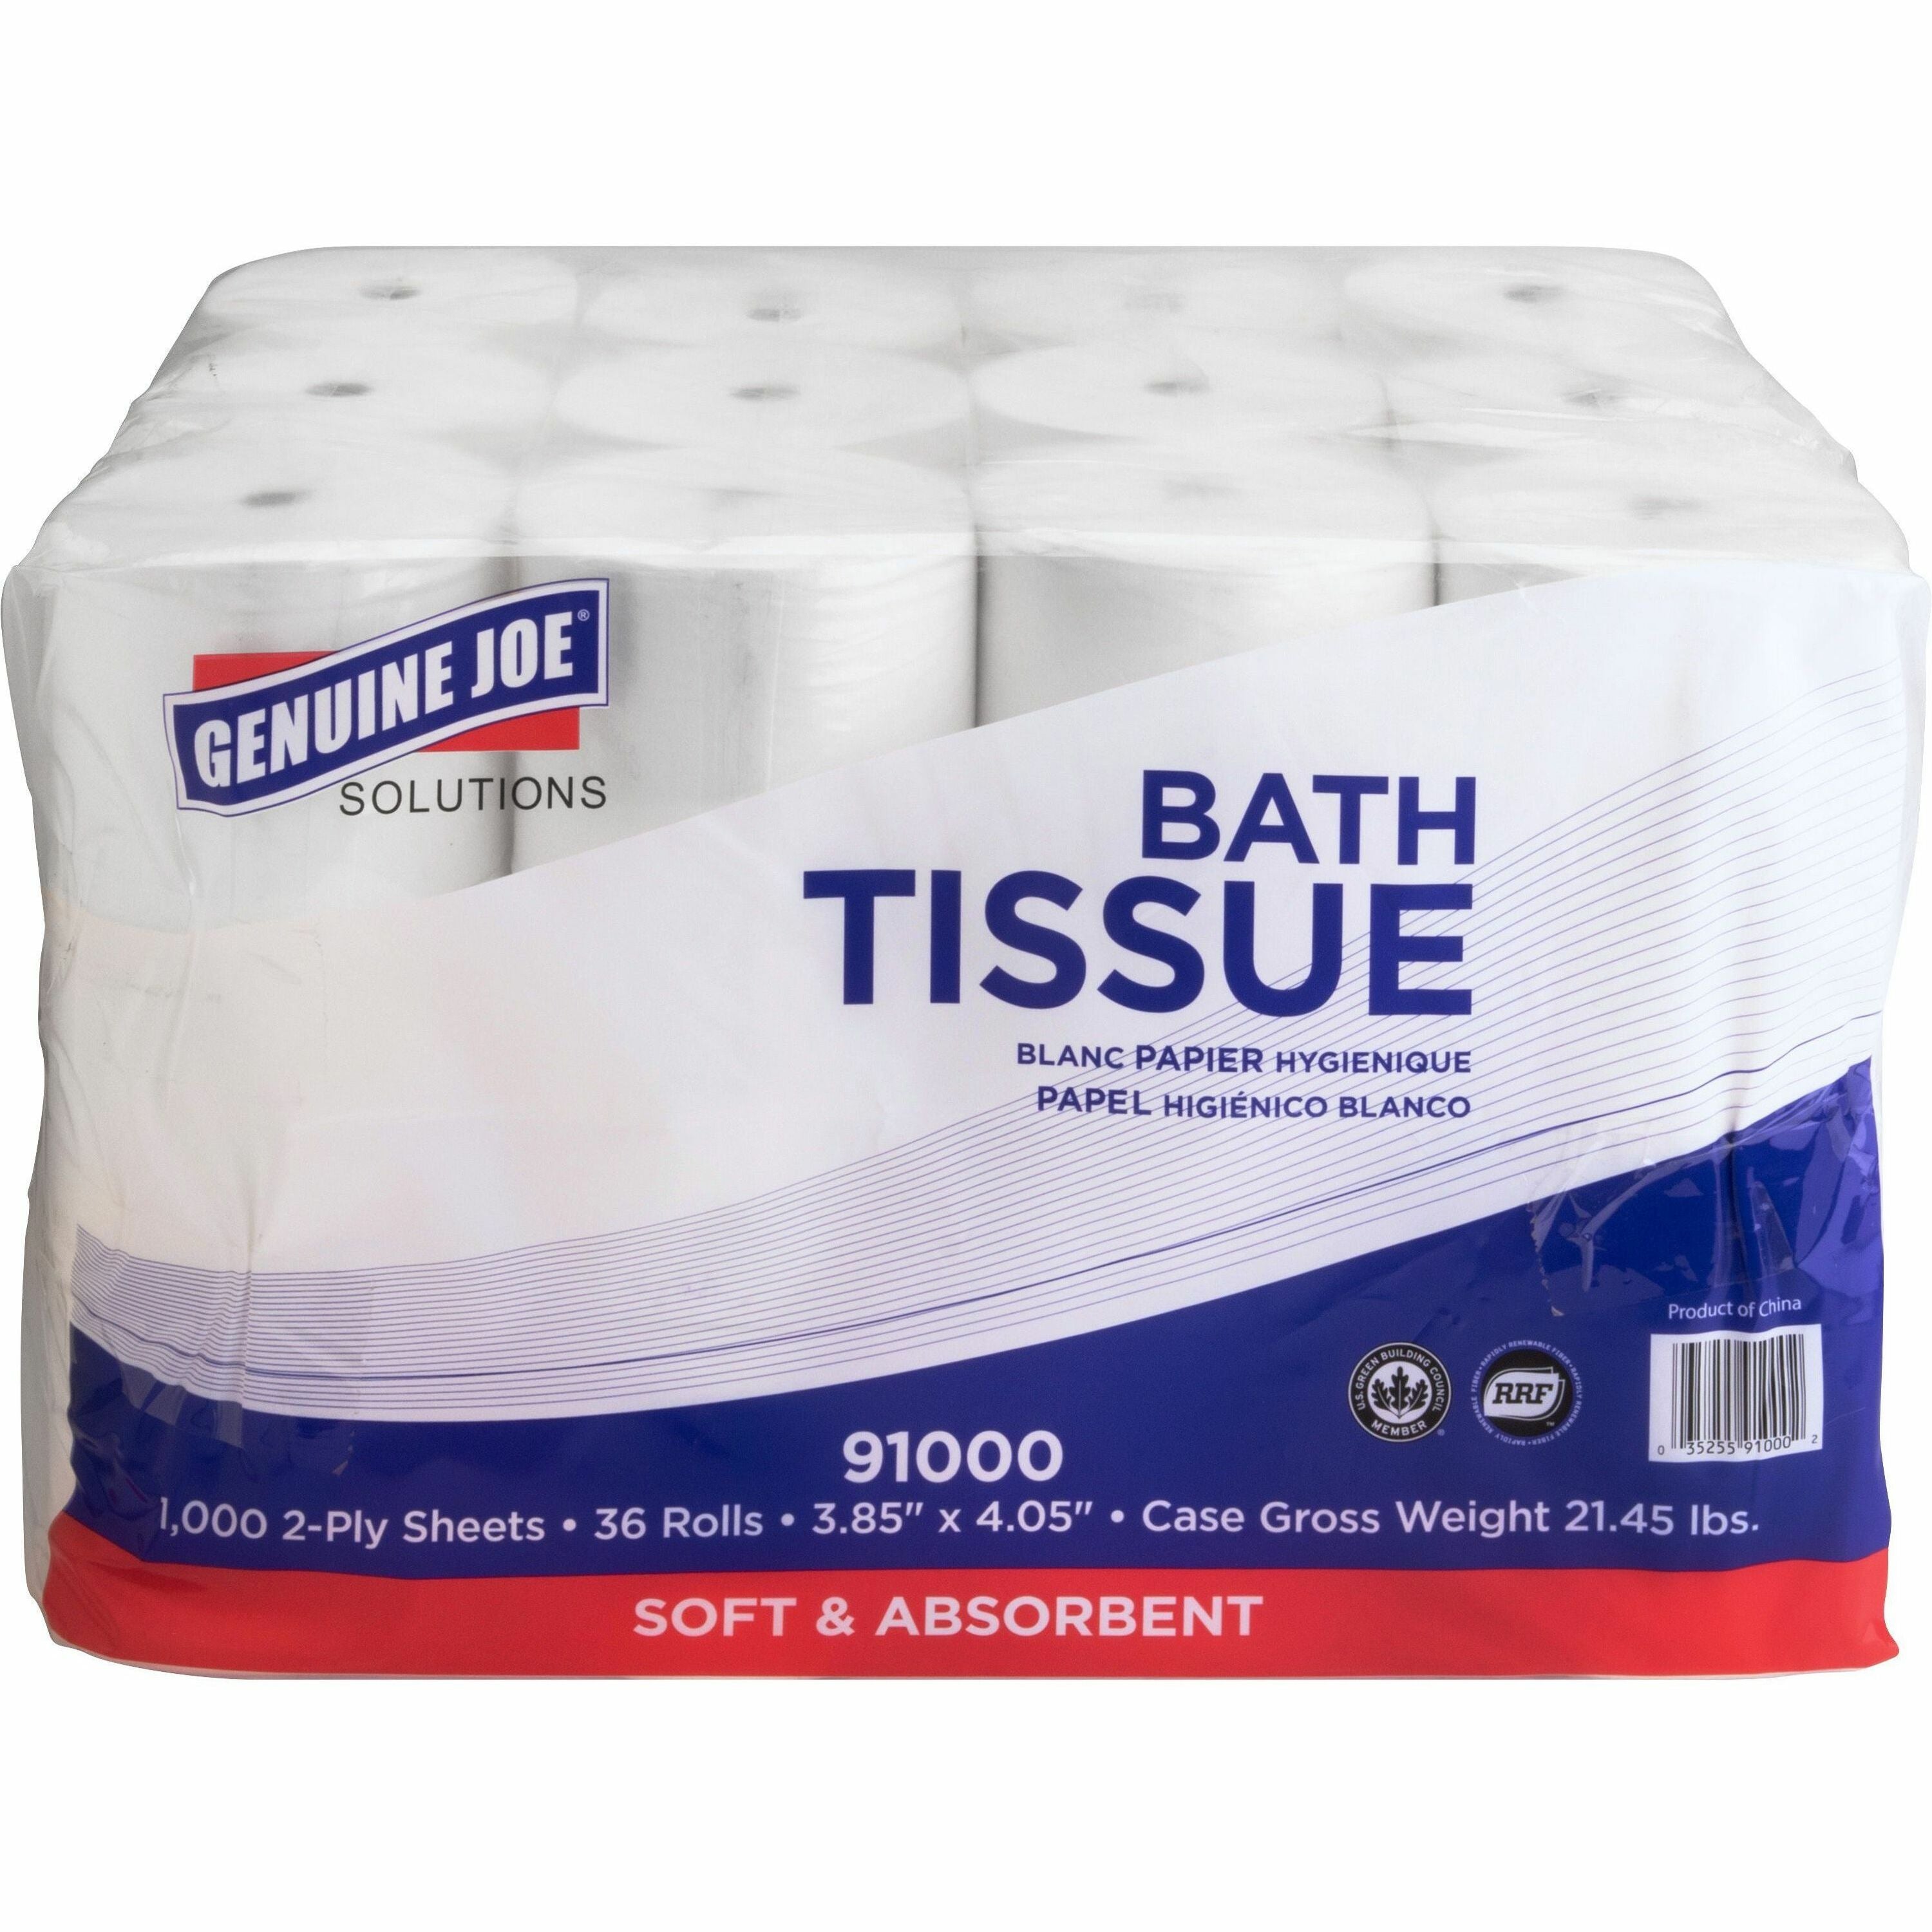 genuine-joe-solutions-double-capacity-bath-tissue-2-ply-1000-sheets-roll-071-core-white-virgin-fiber-embossed-chlorine-free-for-bathroom-36-carton_gjo91000 - 1